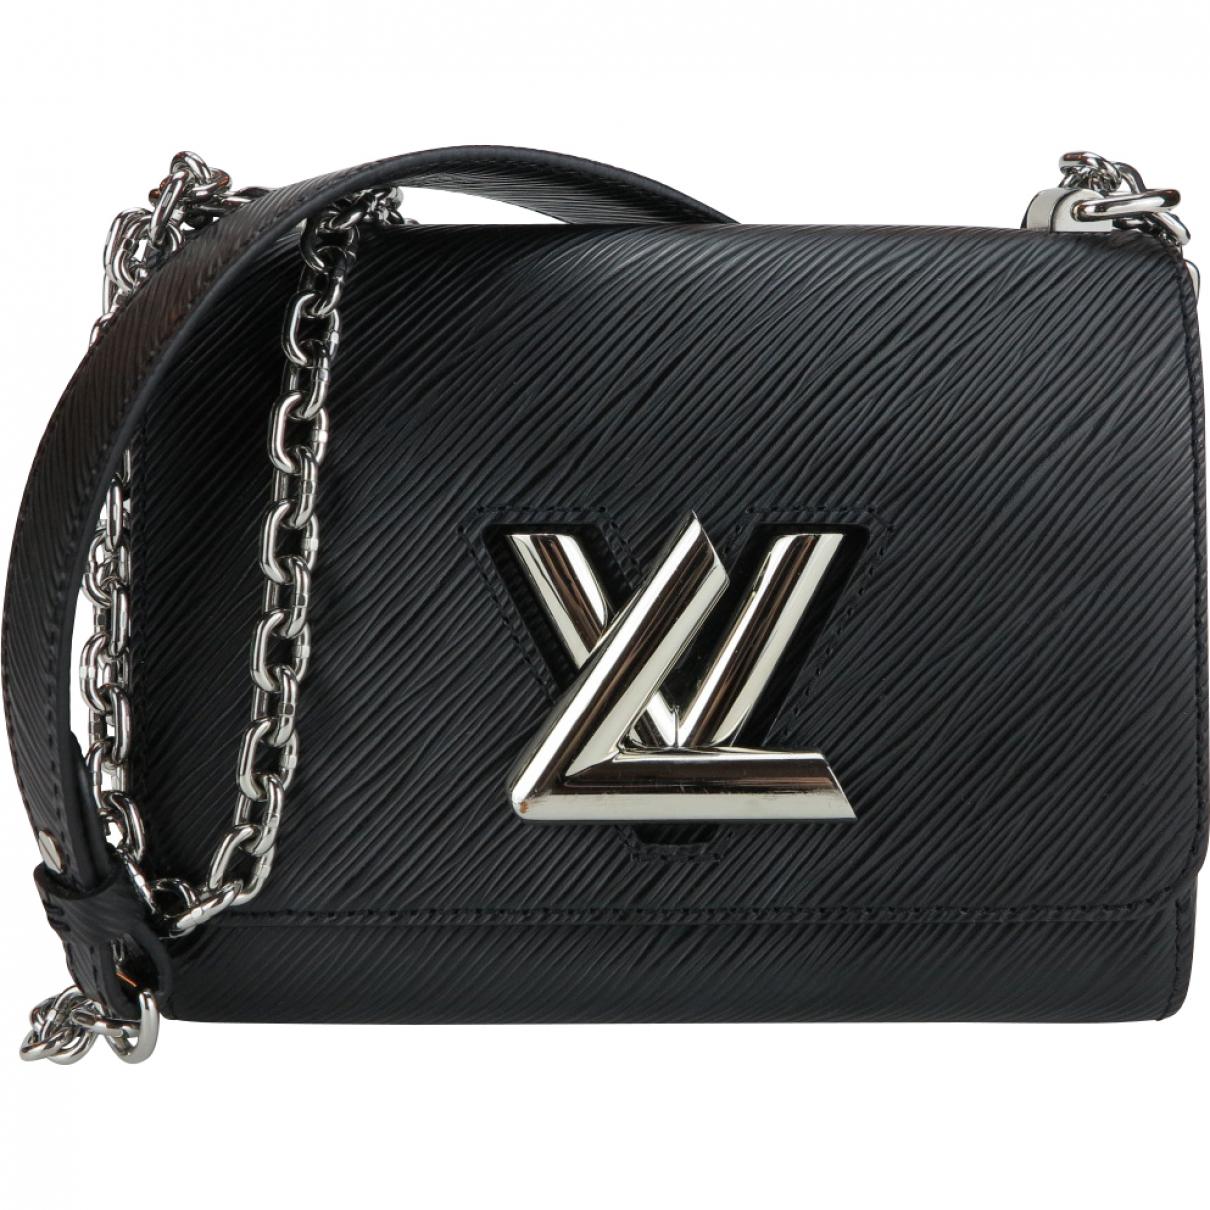 Lyst - Louis Vuitton Pre-owned Twist Black Leather Handbags in Black